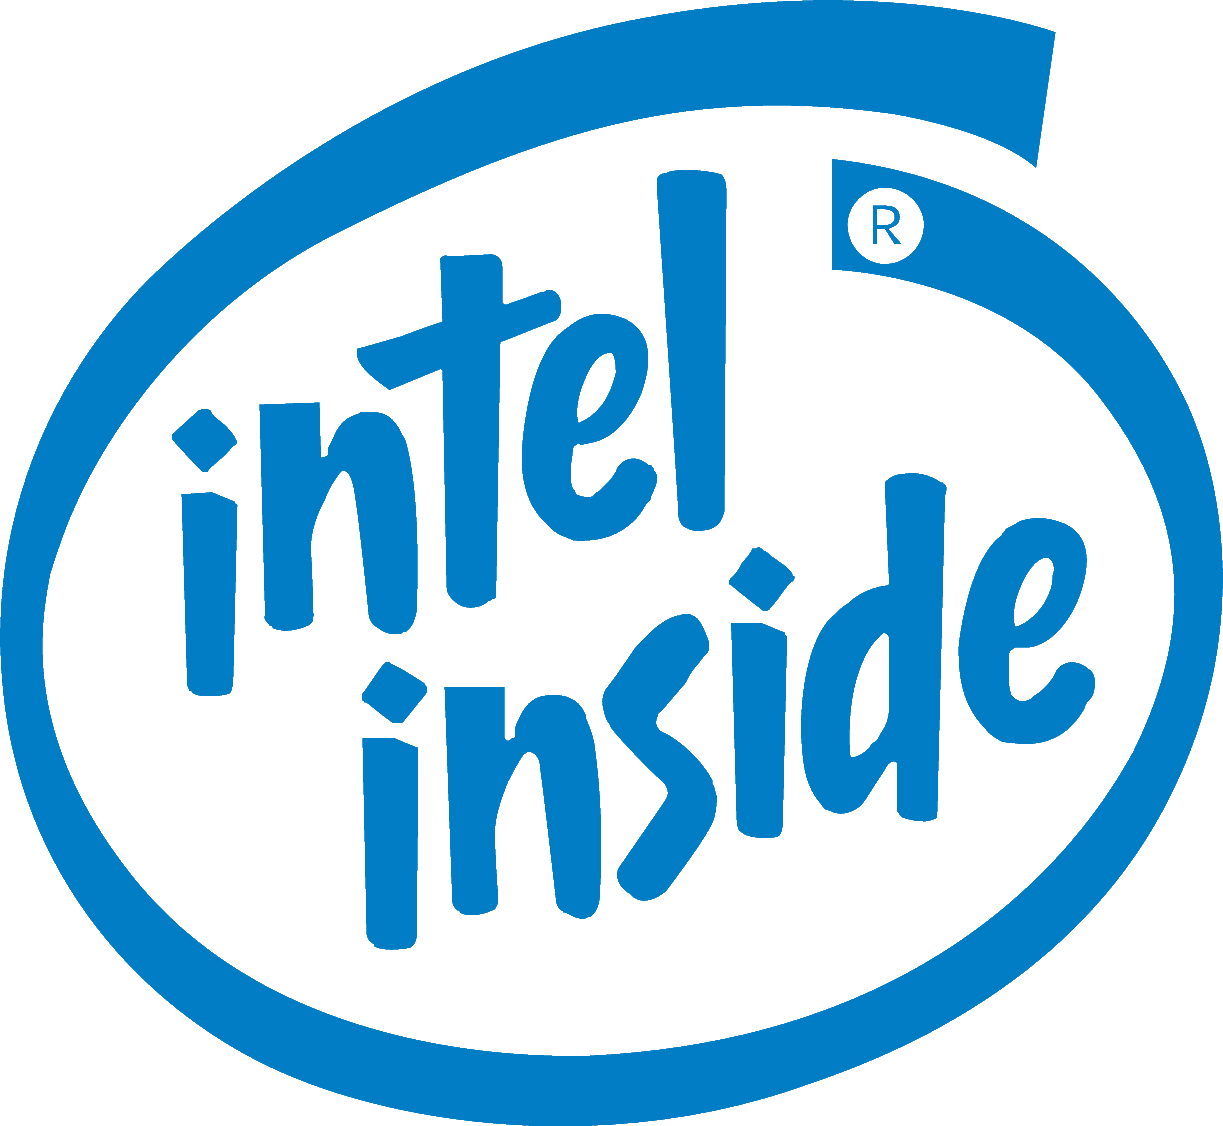 Powered by Intel Logo - Intel Inside (Eruowood) | Logofanonpedia | FANDOM powered by Wikia